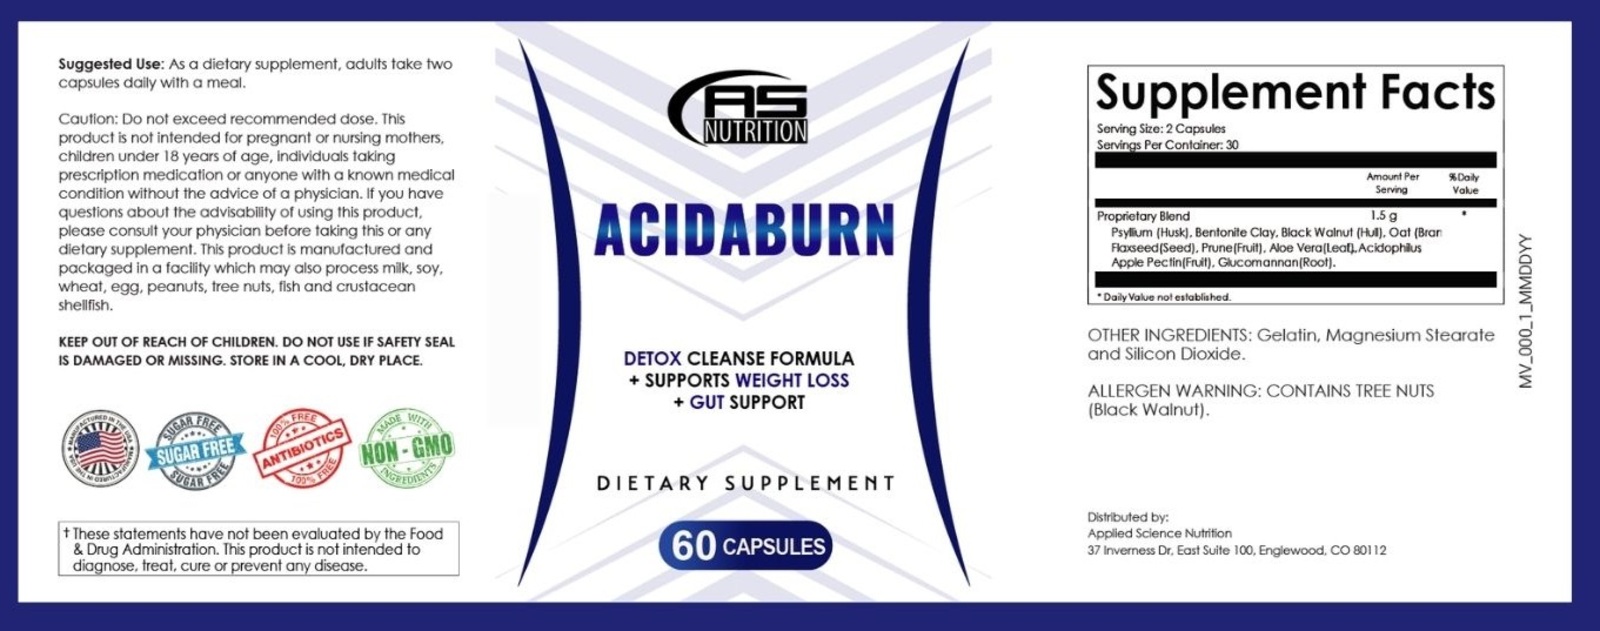 AcidaBurn Supplement Fact